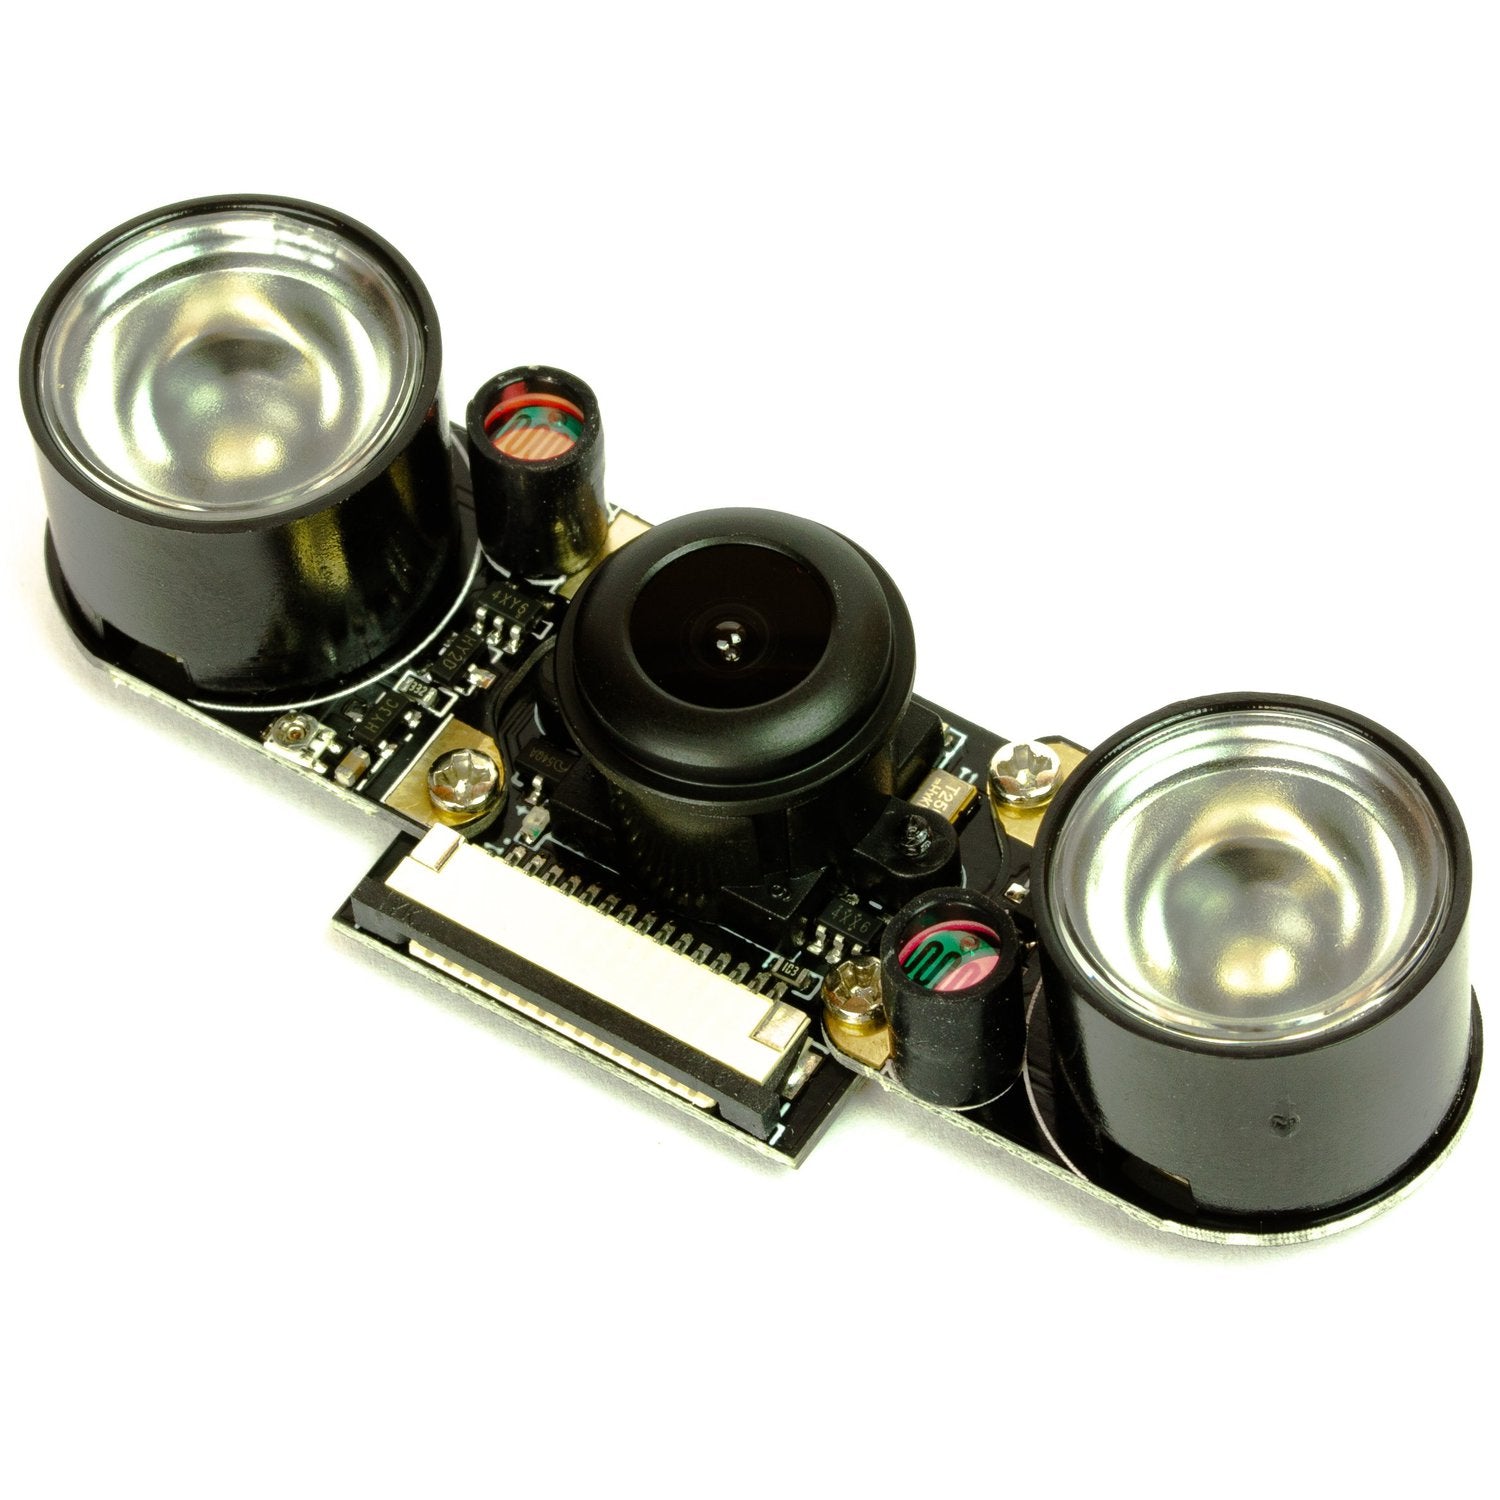 Night vision camera module for Raspberry Pi - 70°